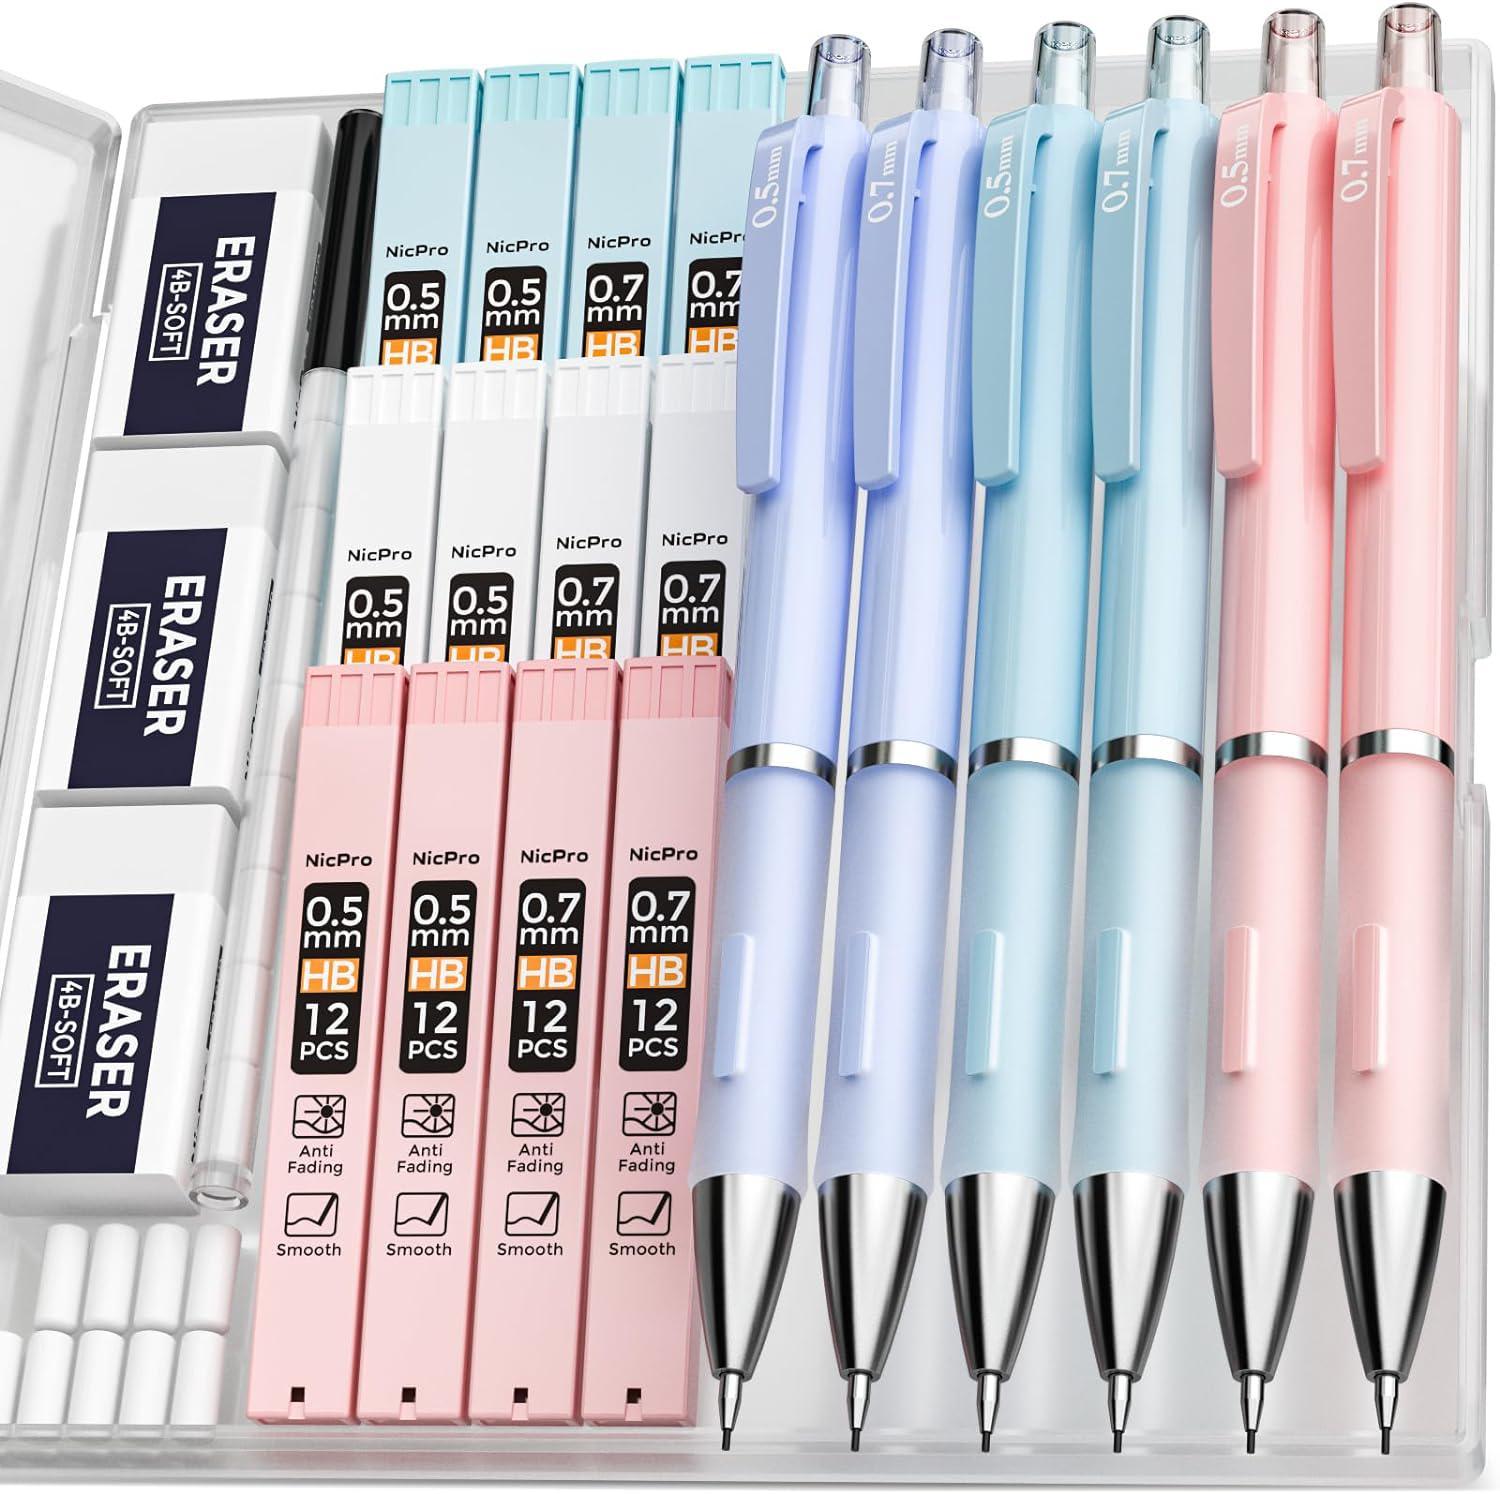  Tofficu 24 Pcs Hardware Tool Pen Novelty Ink Pens